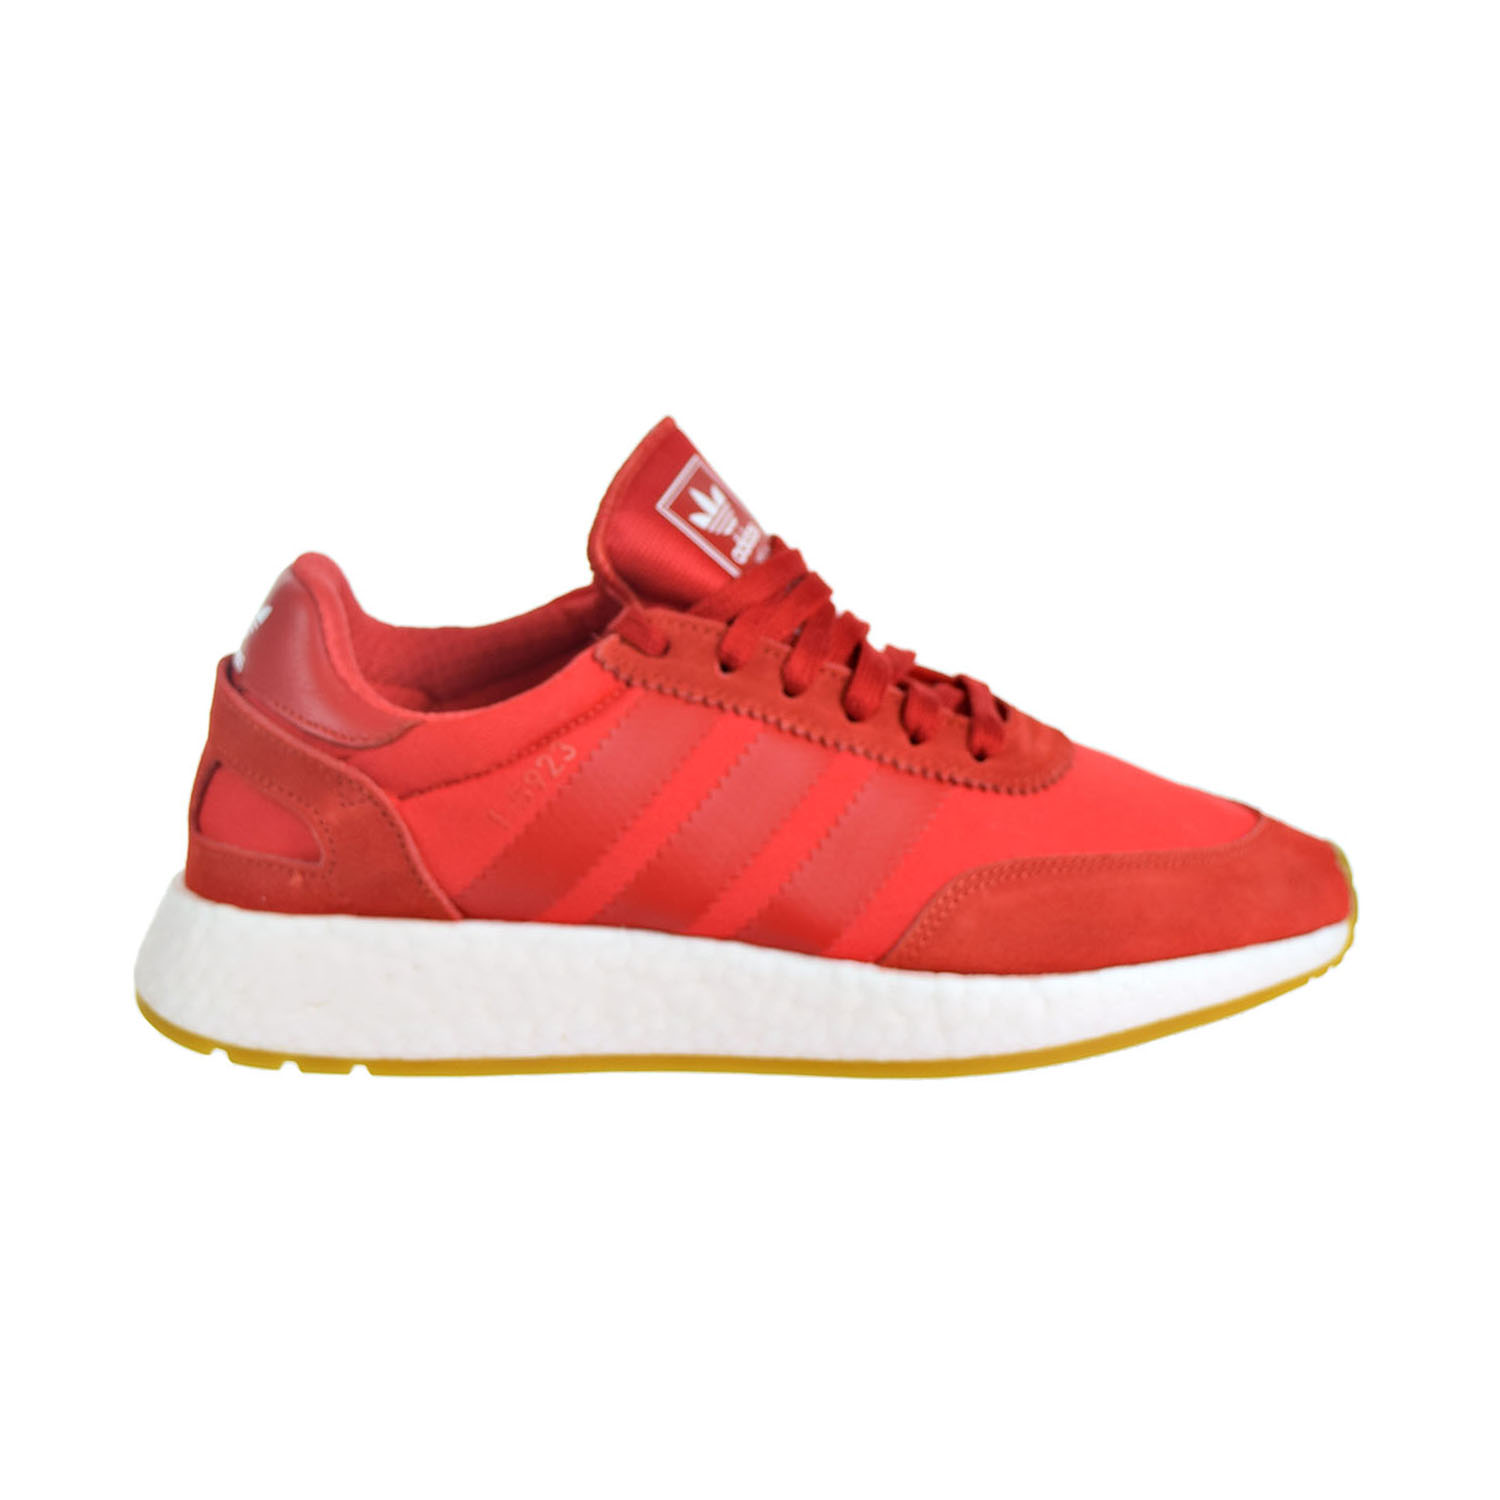 Adidas Originals I-5923 Men's Shoes Red-Gum 3 d97346 | eBay